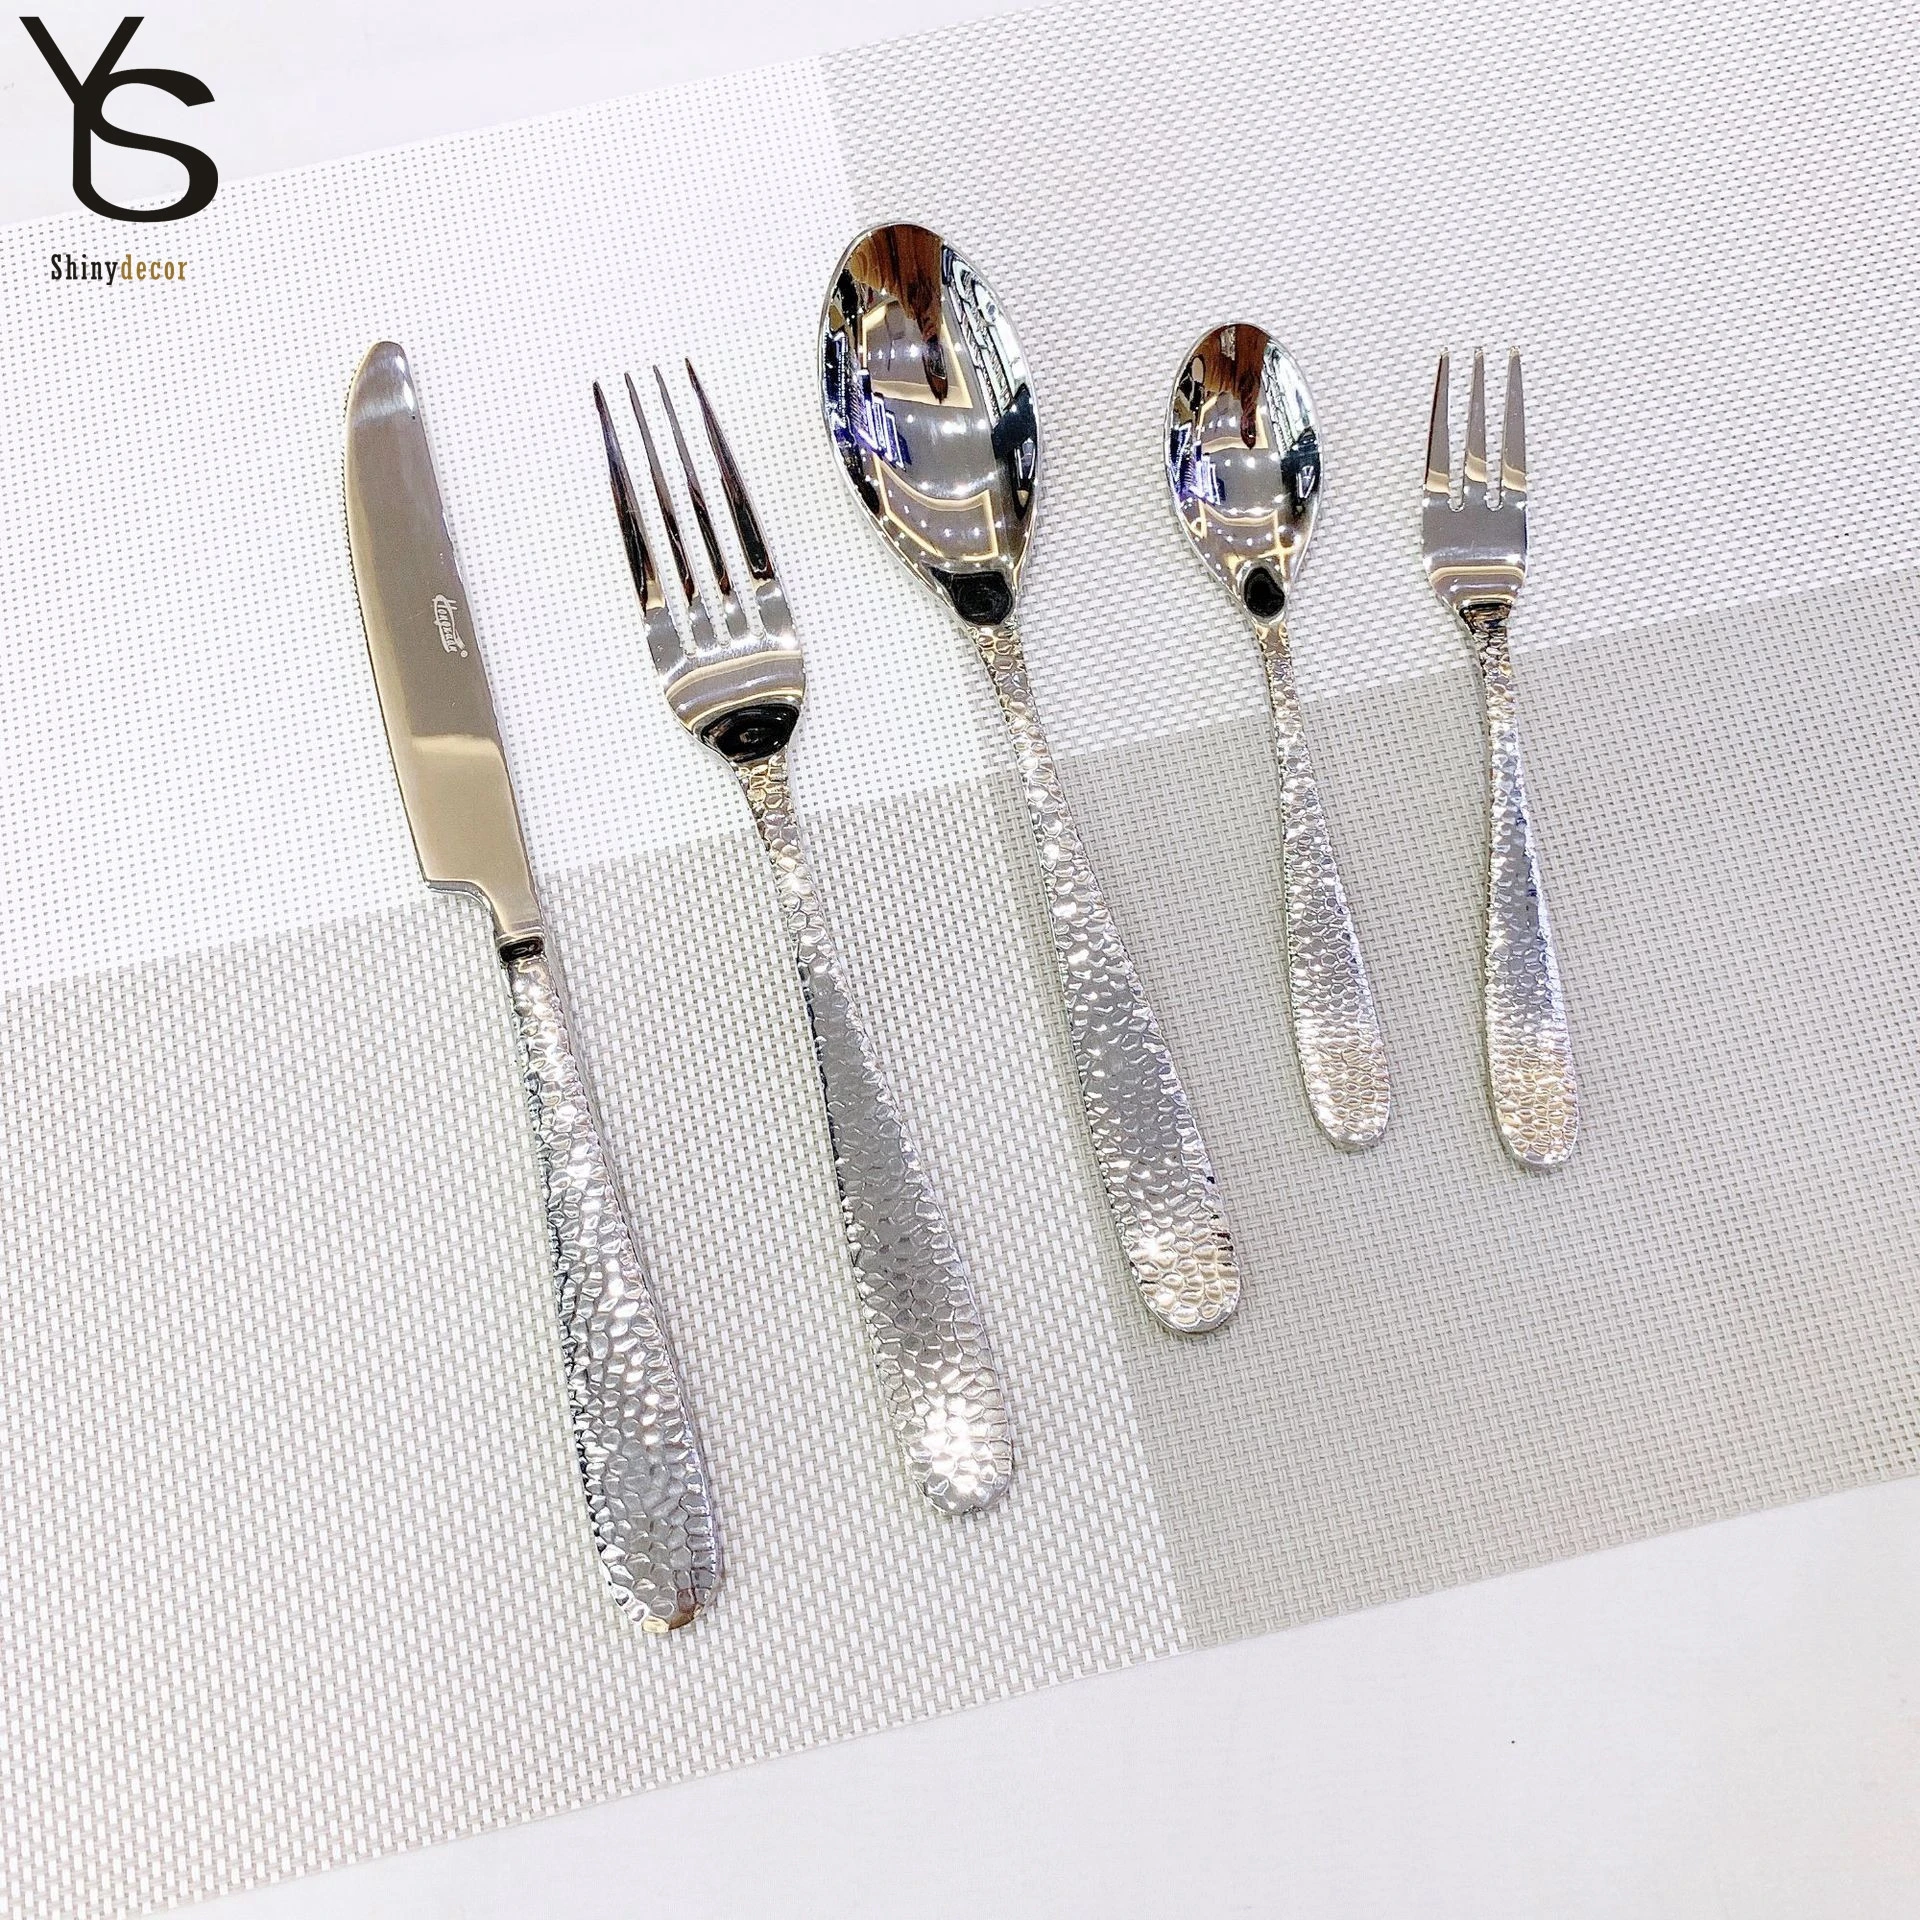 SDC003-1 silver mirror polish Stainless Steel Fork Knife Spoon set restaurant dinner flatware